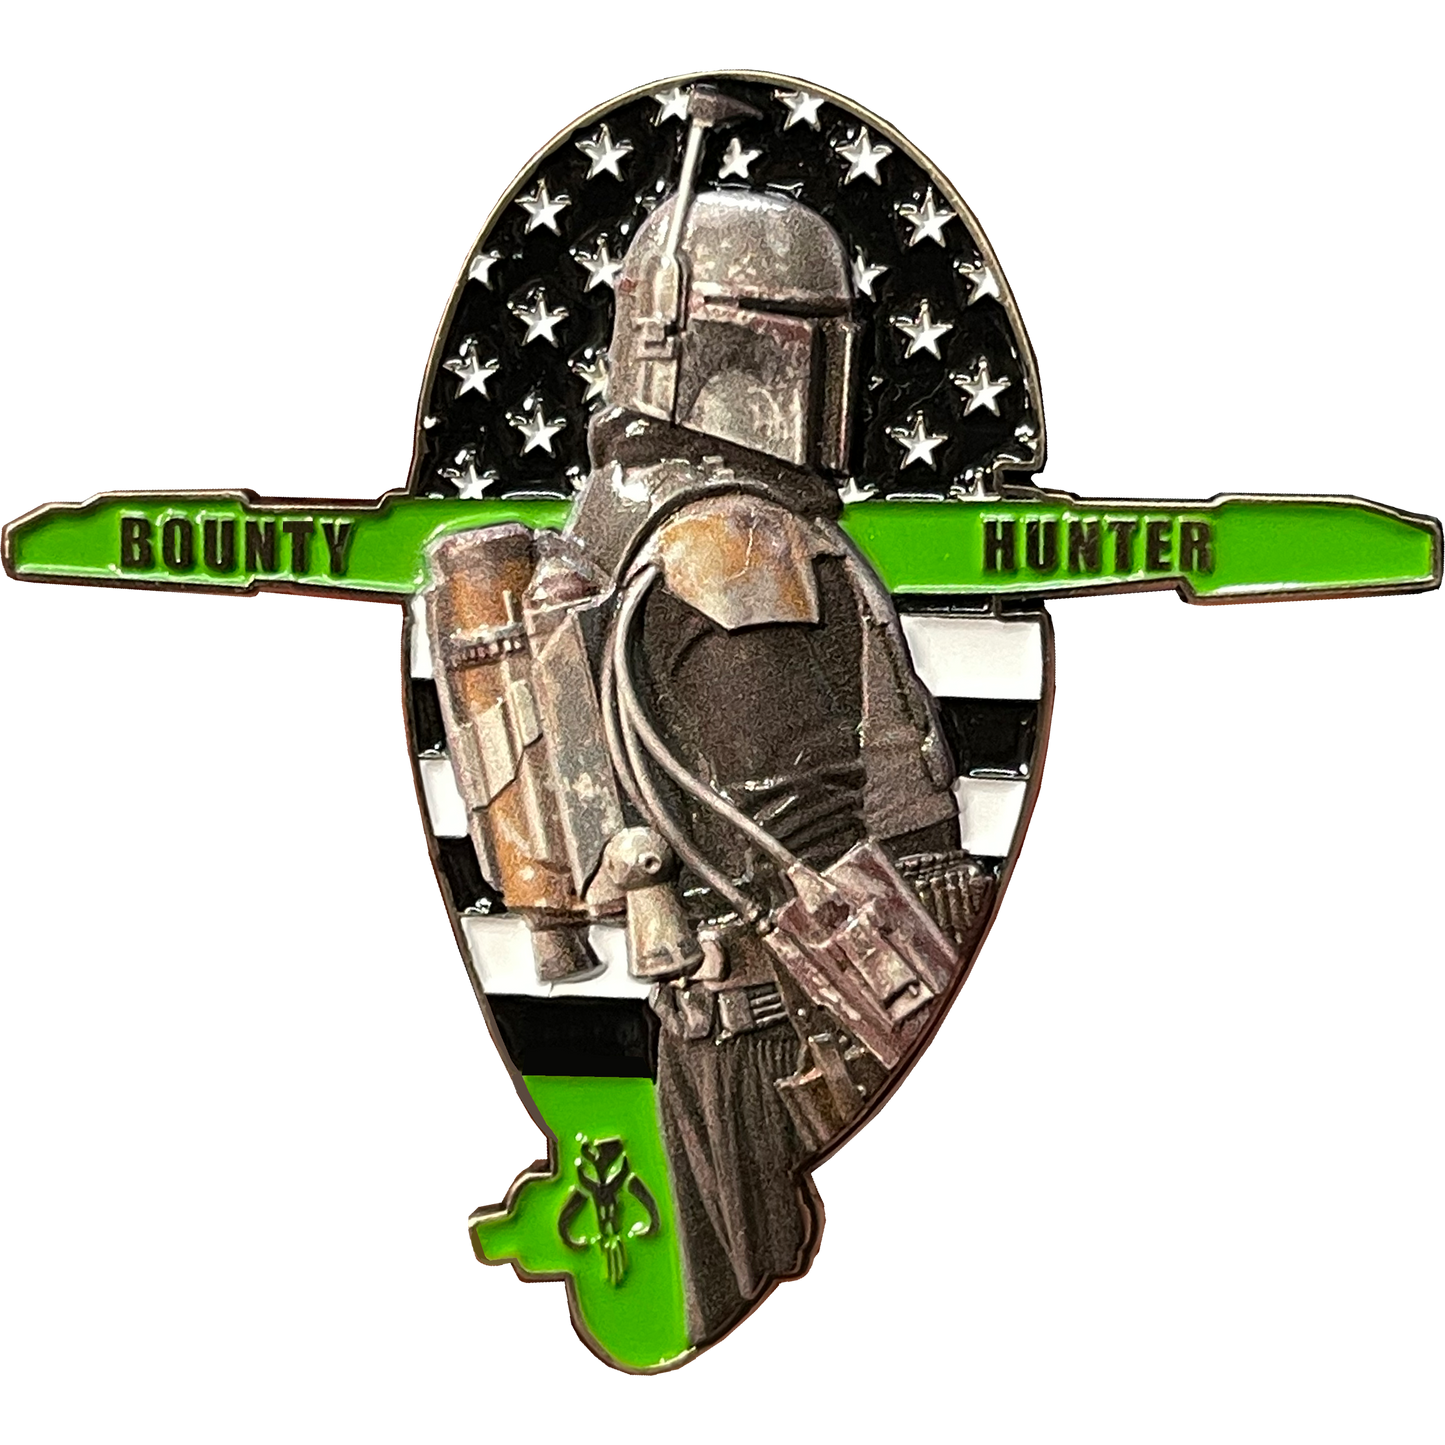 BL13-012 Bounty Hunter Slave 1 One I Thin Green Line CBP Border Patrol Deputy Sheriff Marines Army Challenge Coin